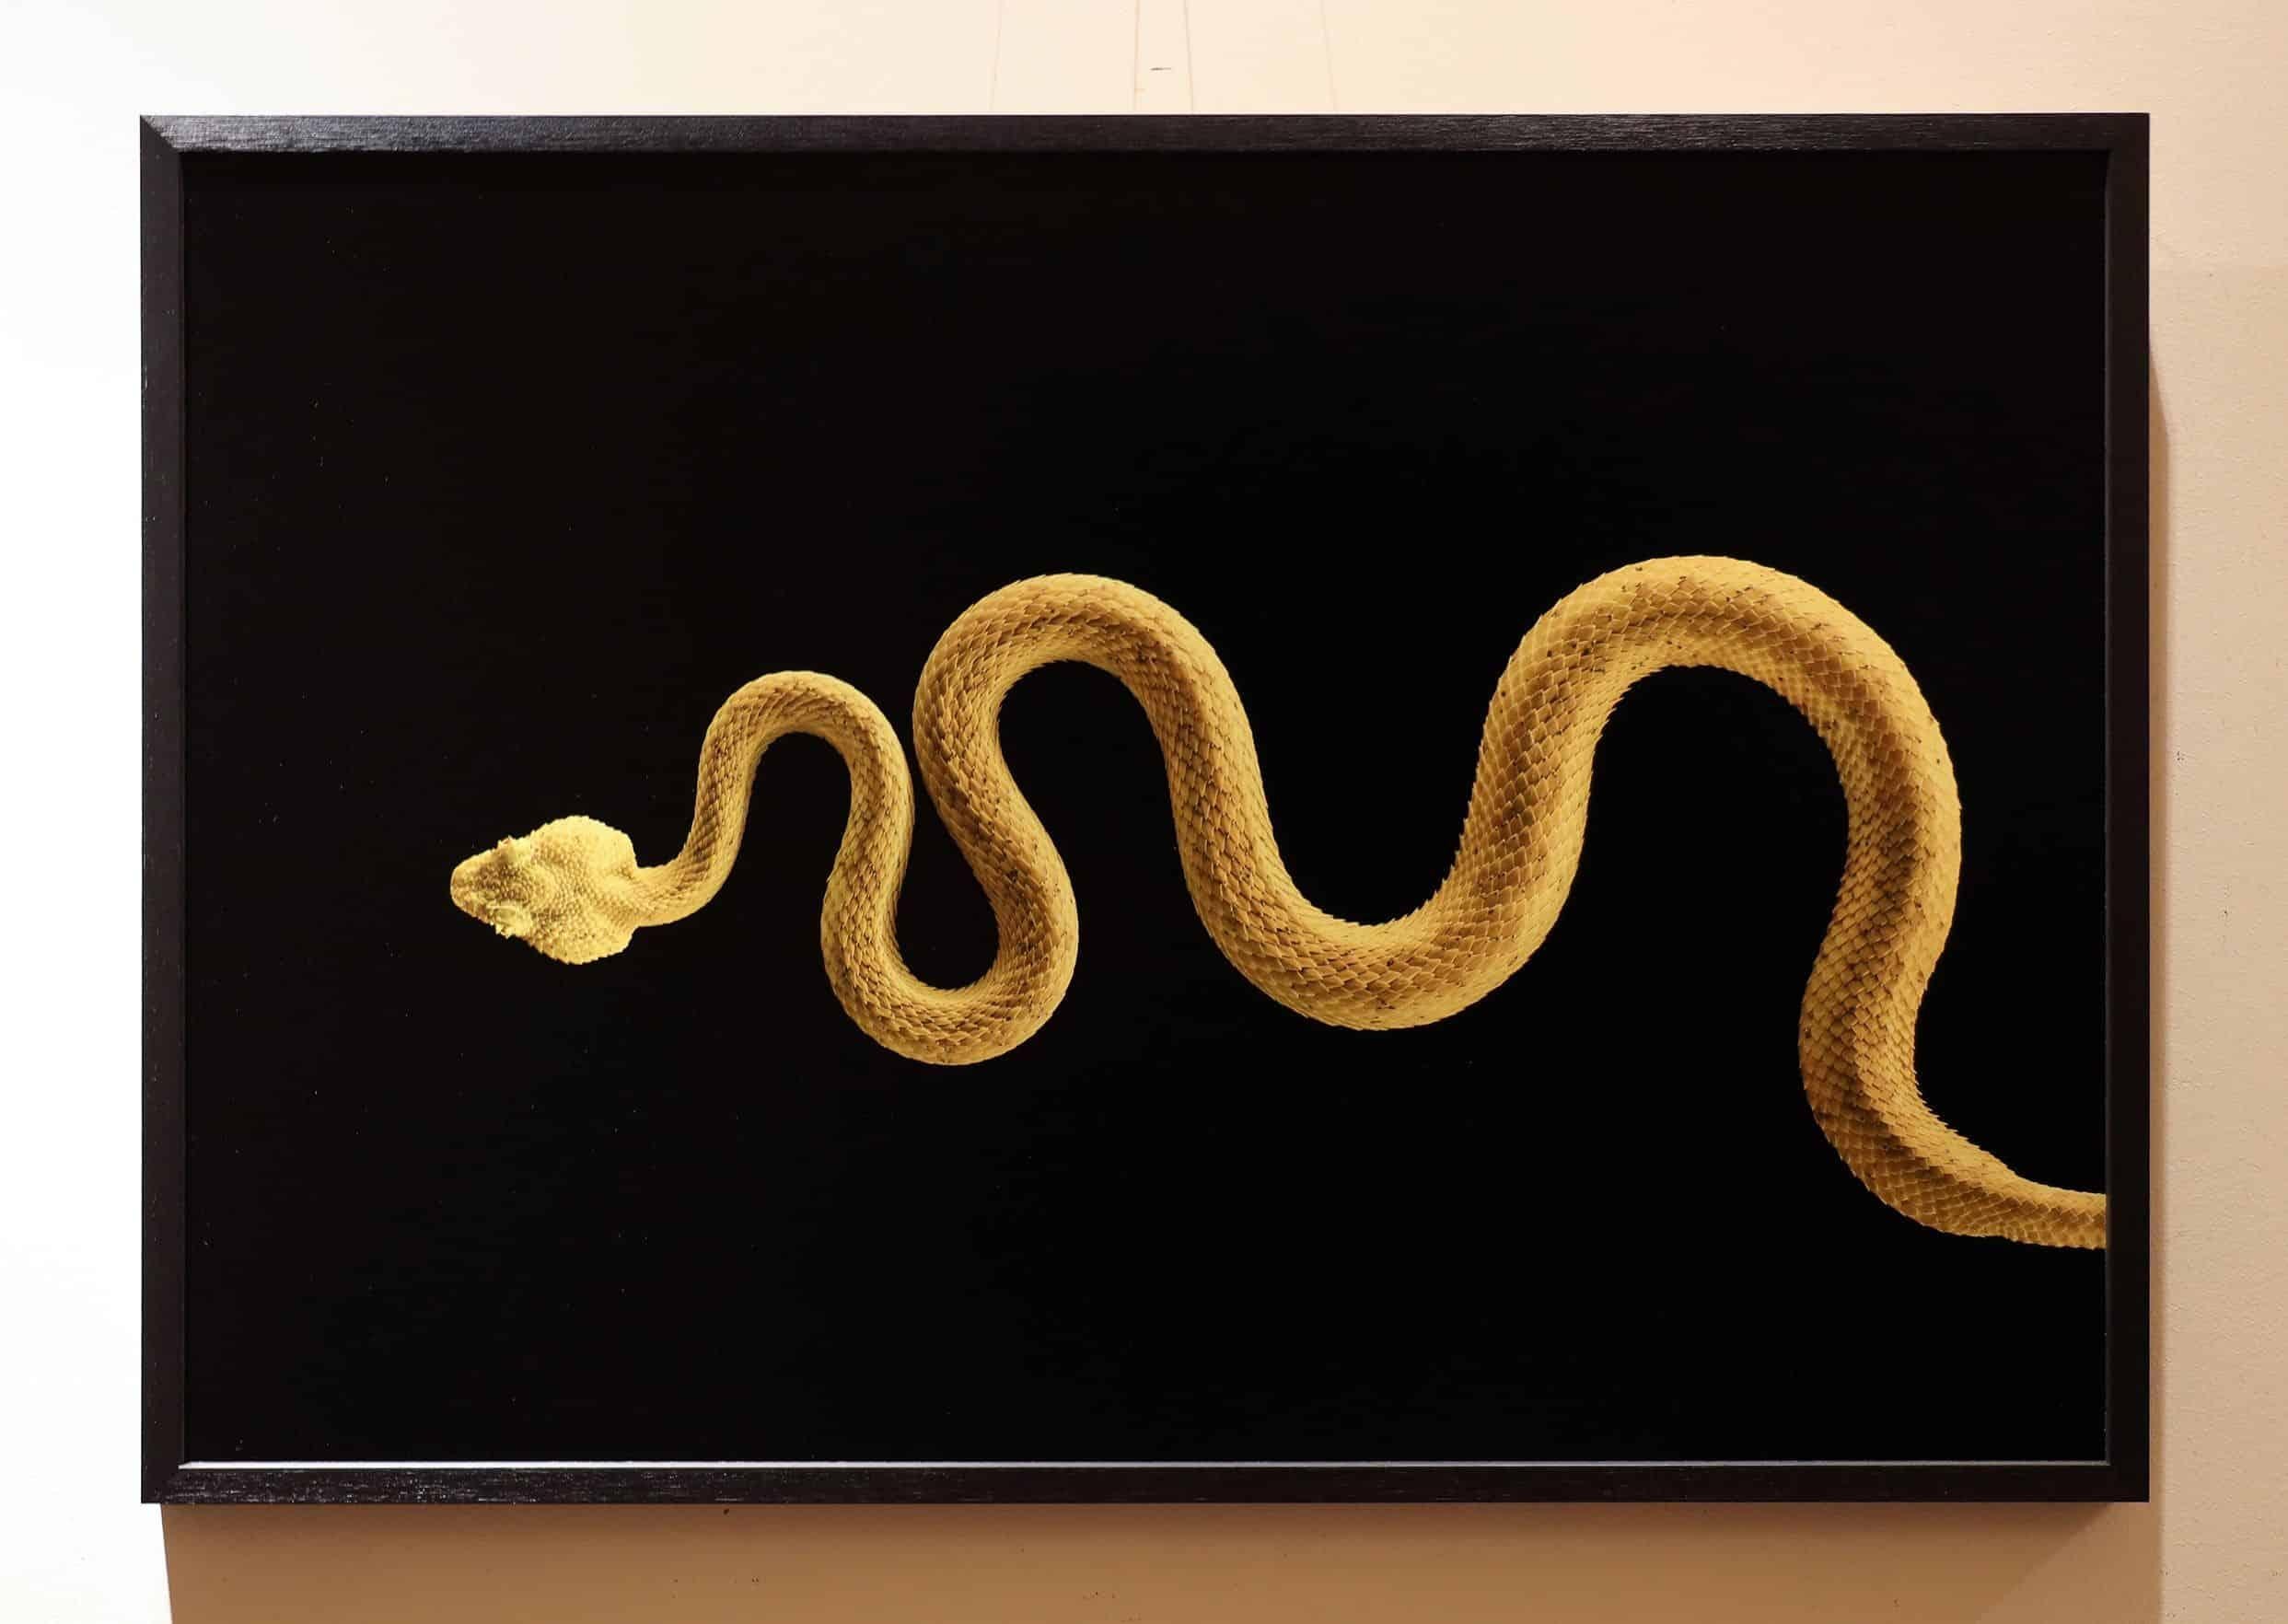 Eyelash Pit Viper #1 by Brad Wilson - Animal portrait photography, snake For Sale 3